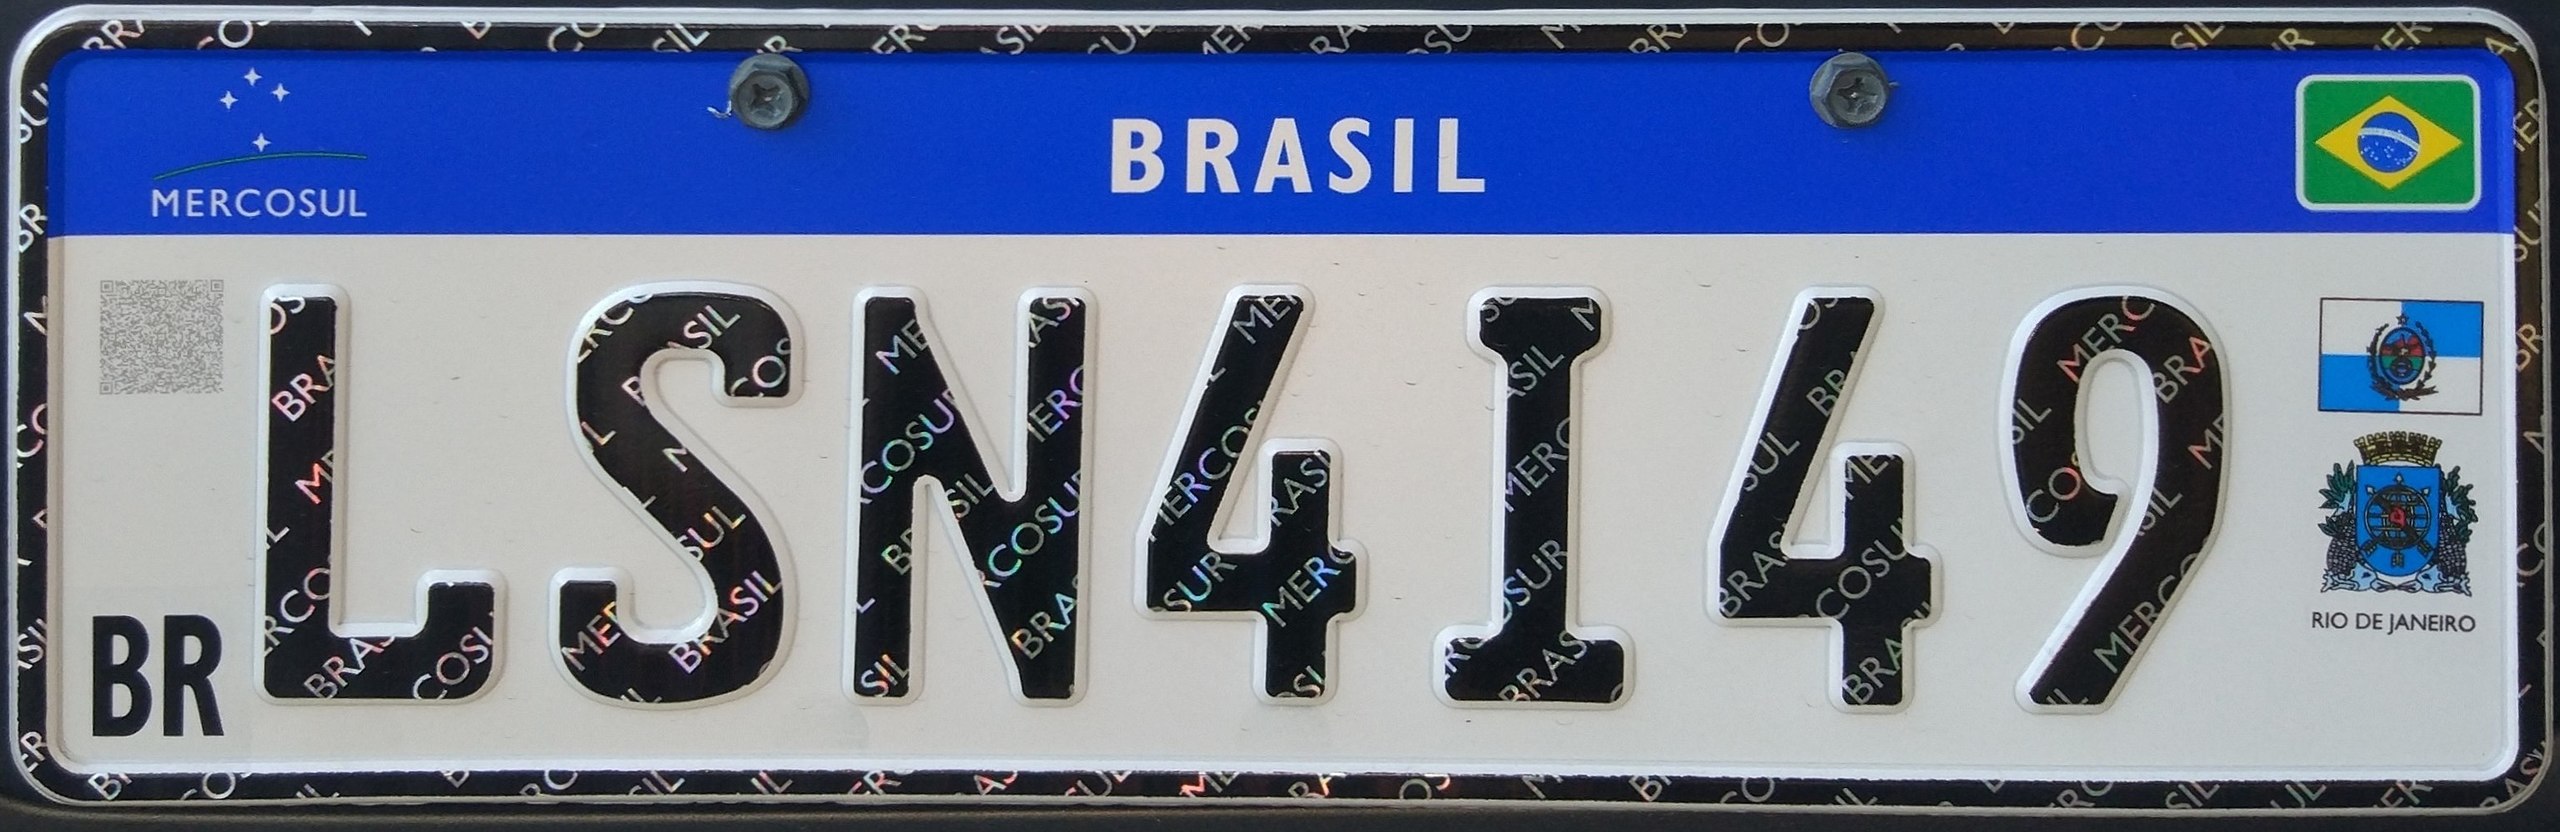 2560px-Brazilian_vehicle_license_plate_%282018-%29.jpg